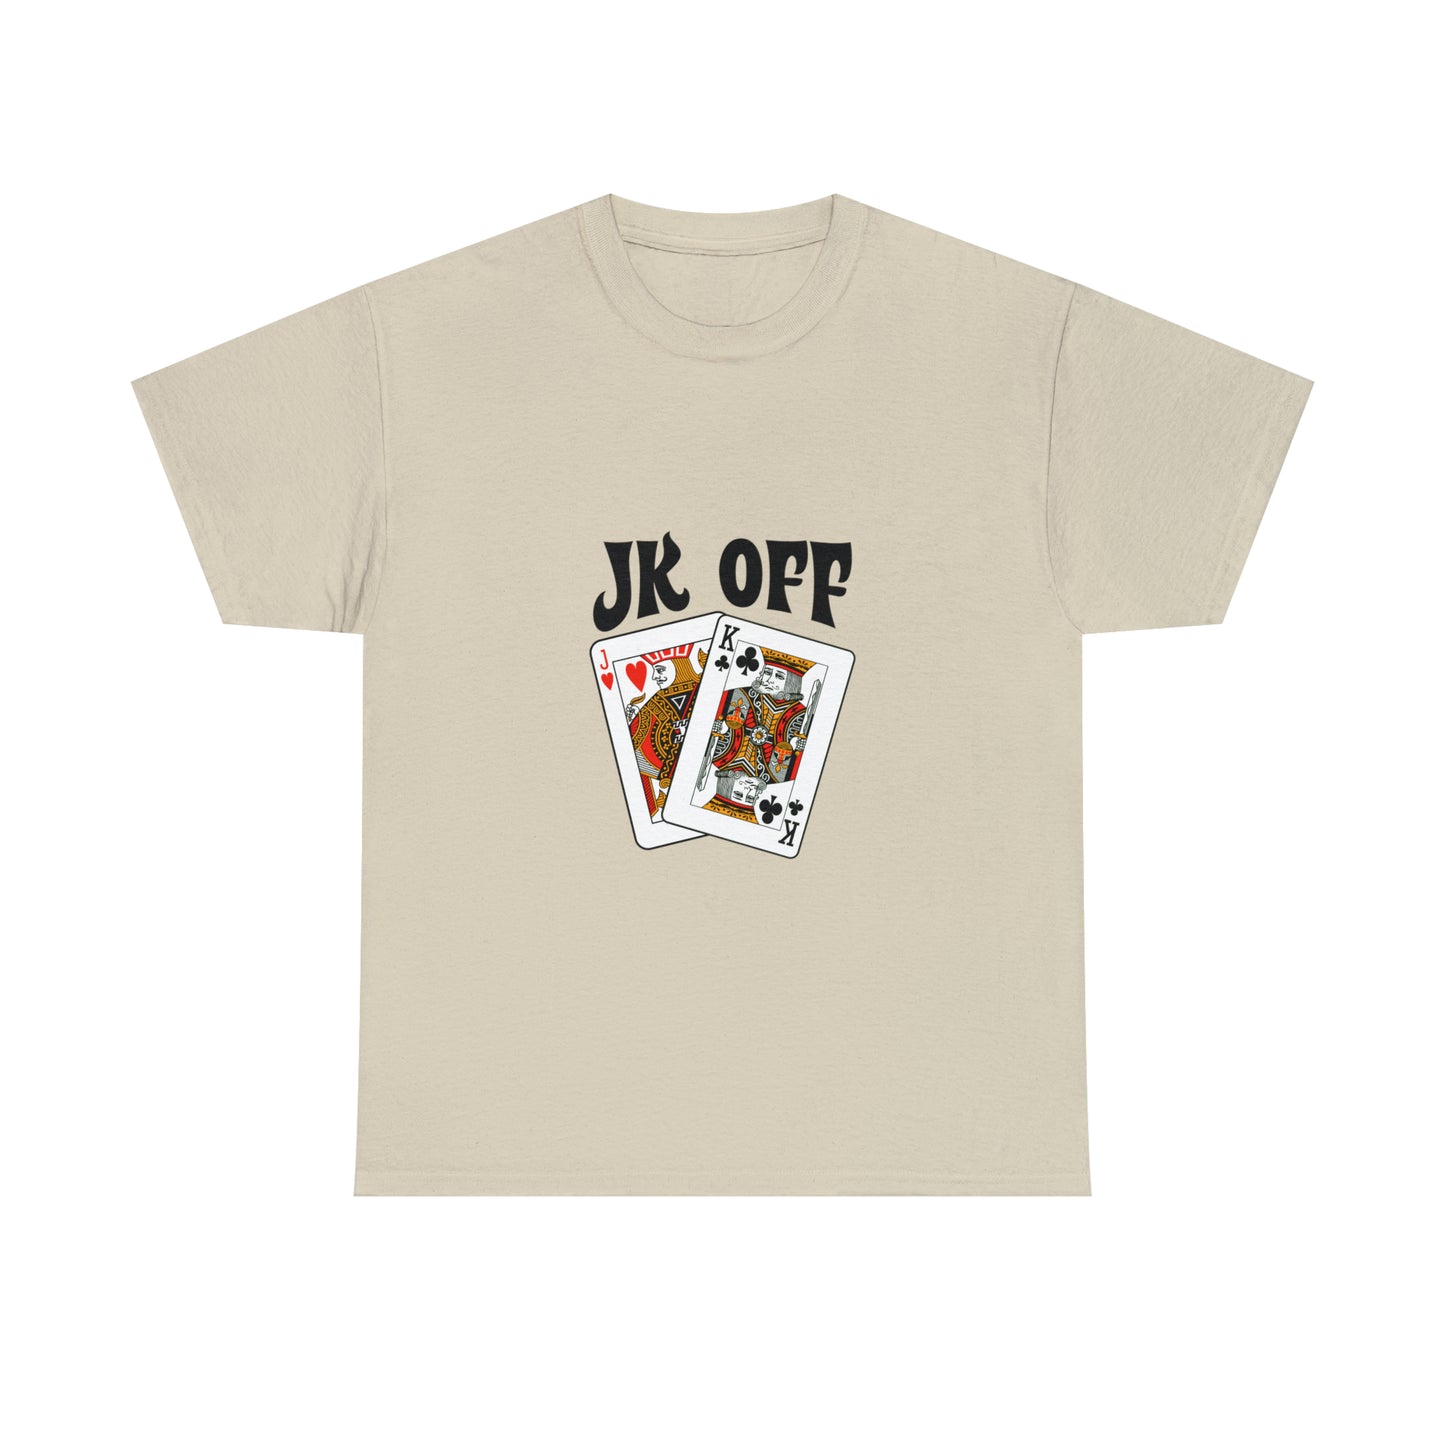 Custom Parody T-shirt, JK off shirt design.